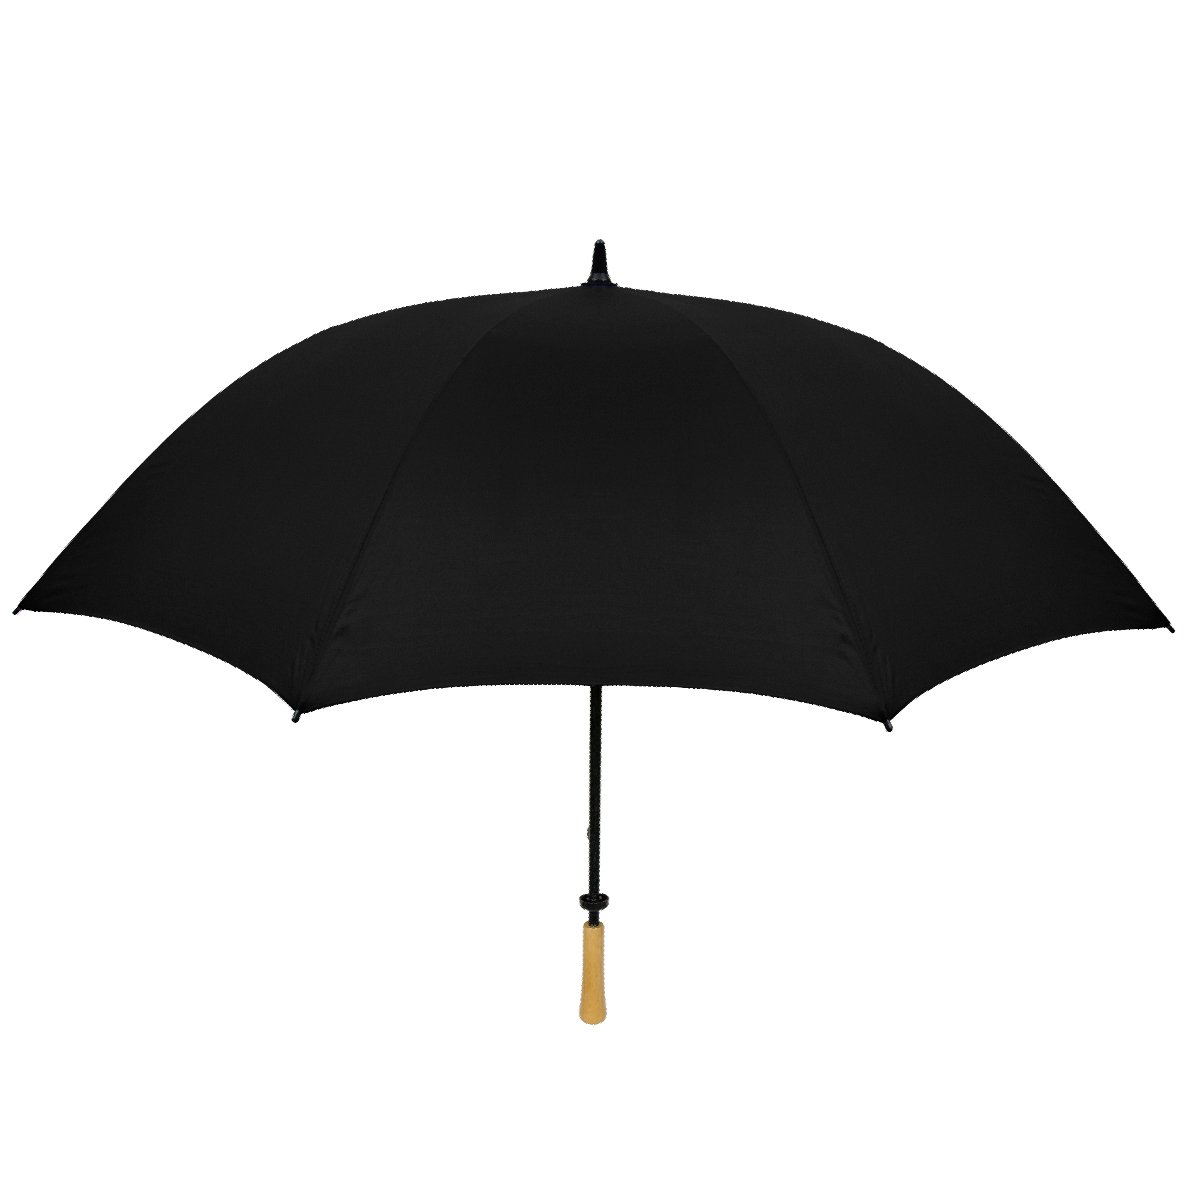 Black The Hole-In-One Golf Umbrella